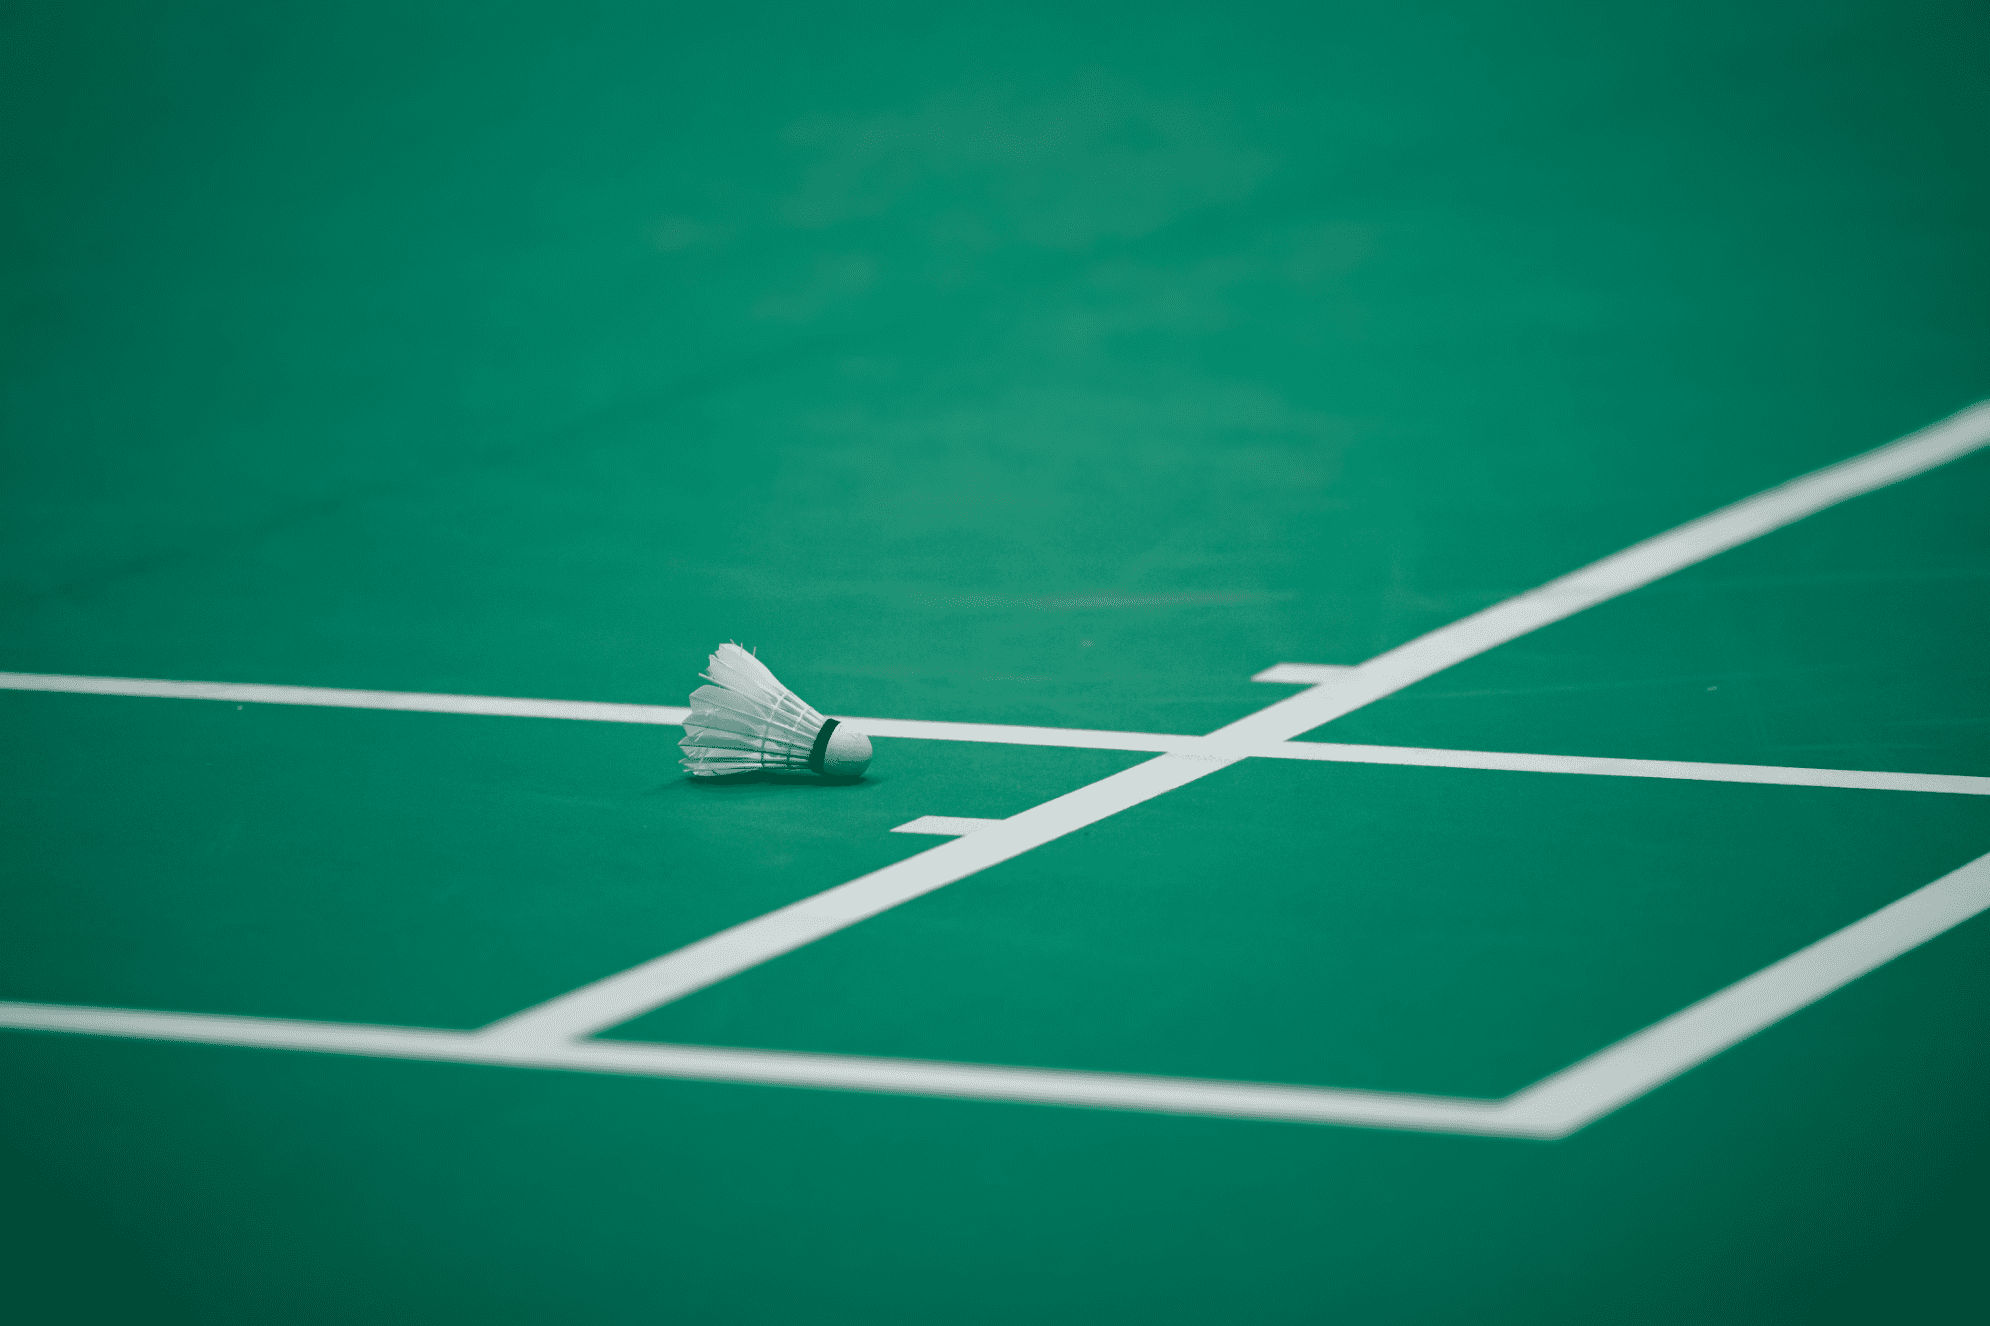 Find A Court | Badminton England